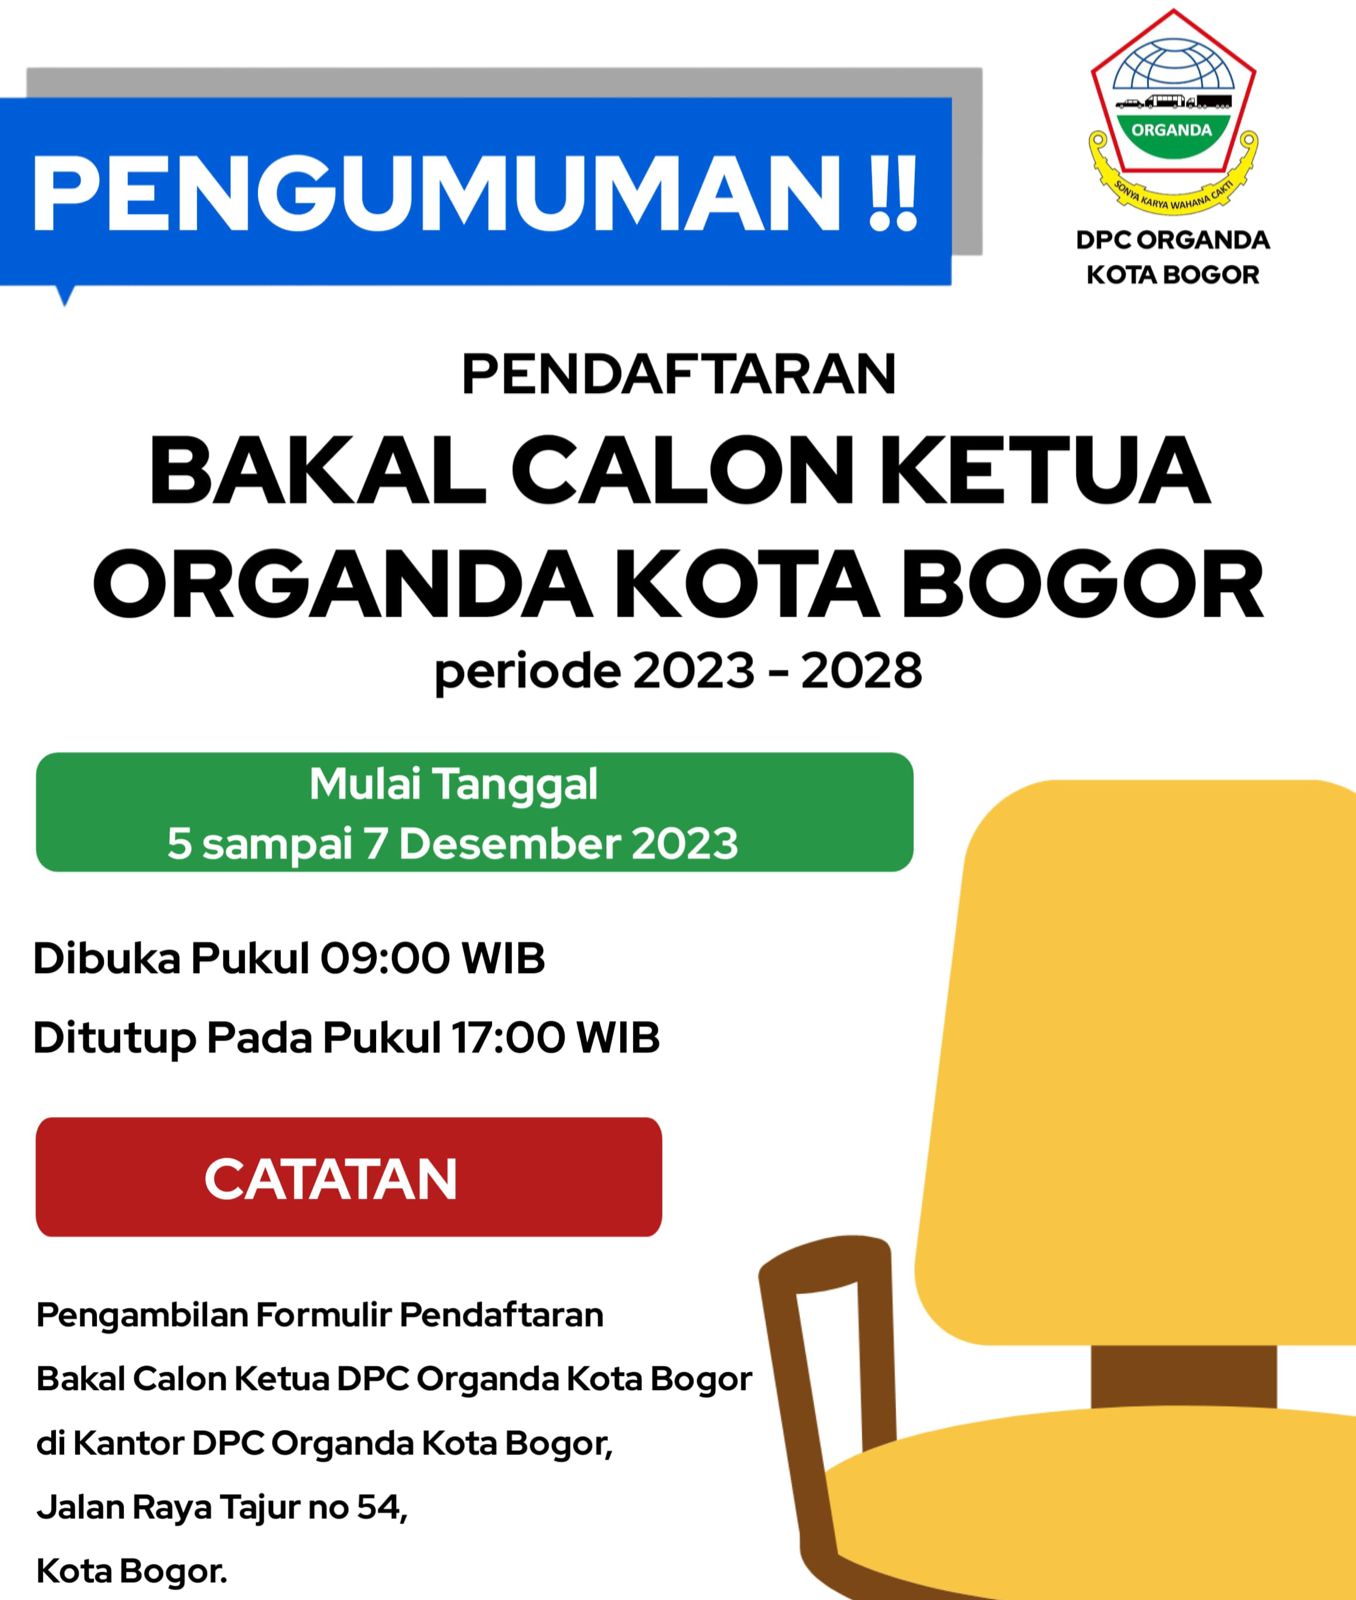 Organda Kota Bogor